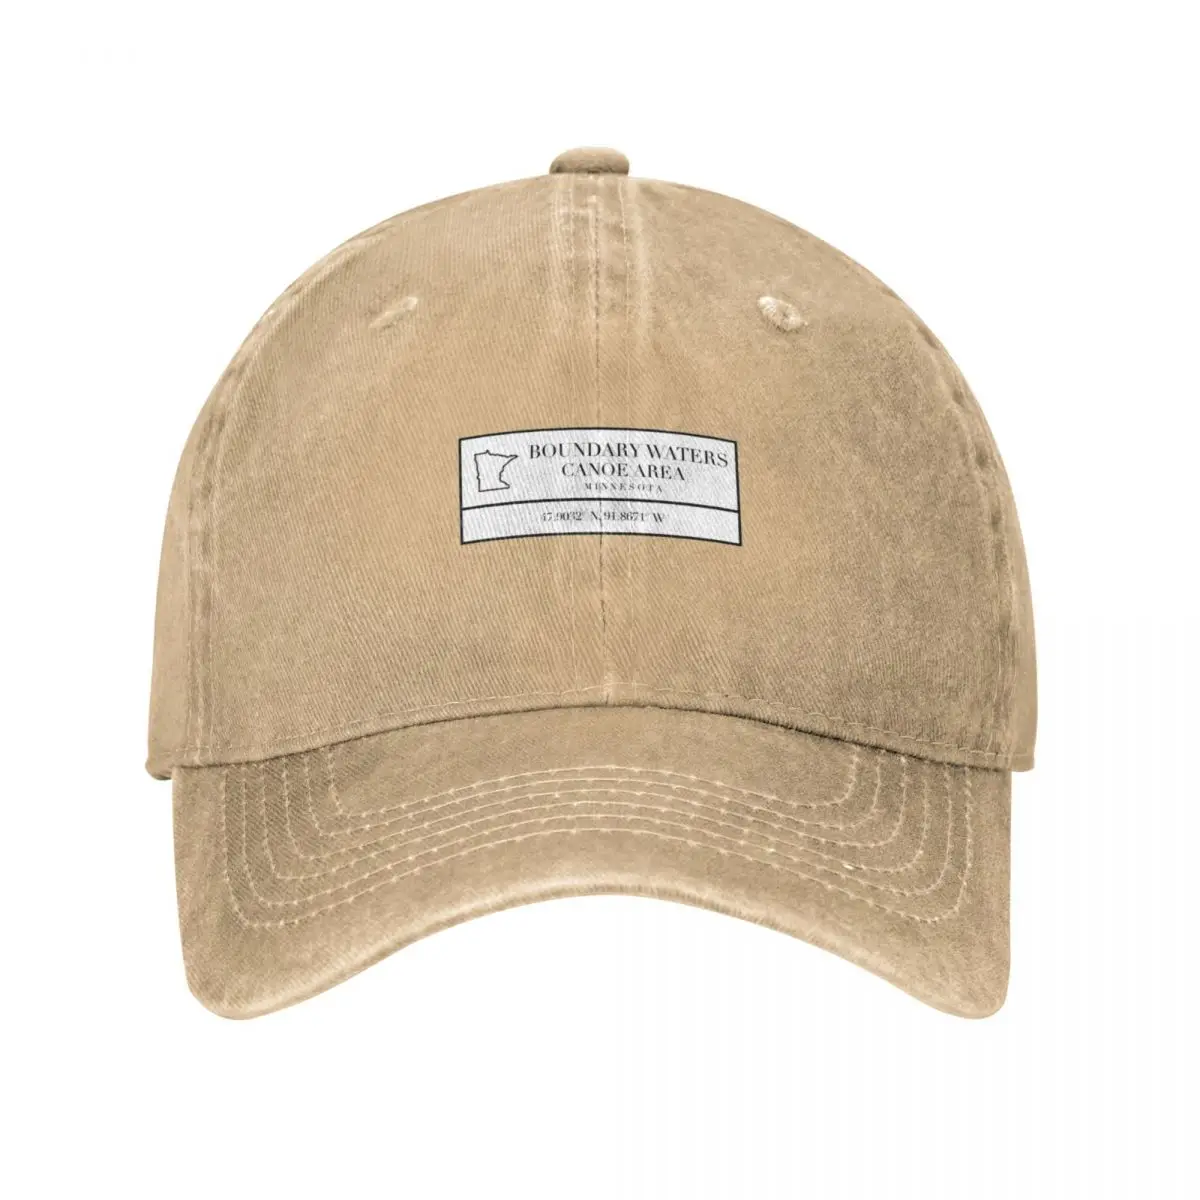 

Boundary Waters Canoe Area (BWCA) Coordinates Cap Cowboy Hat baseball cap cap trucker hat Ladies hat Men's